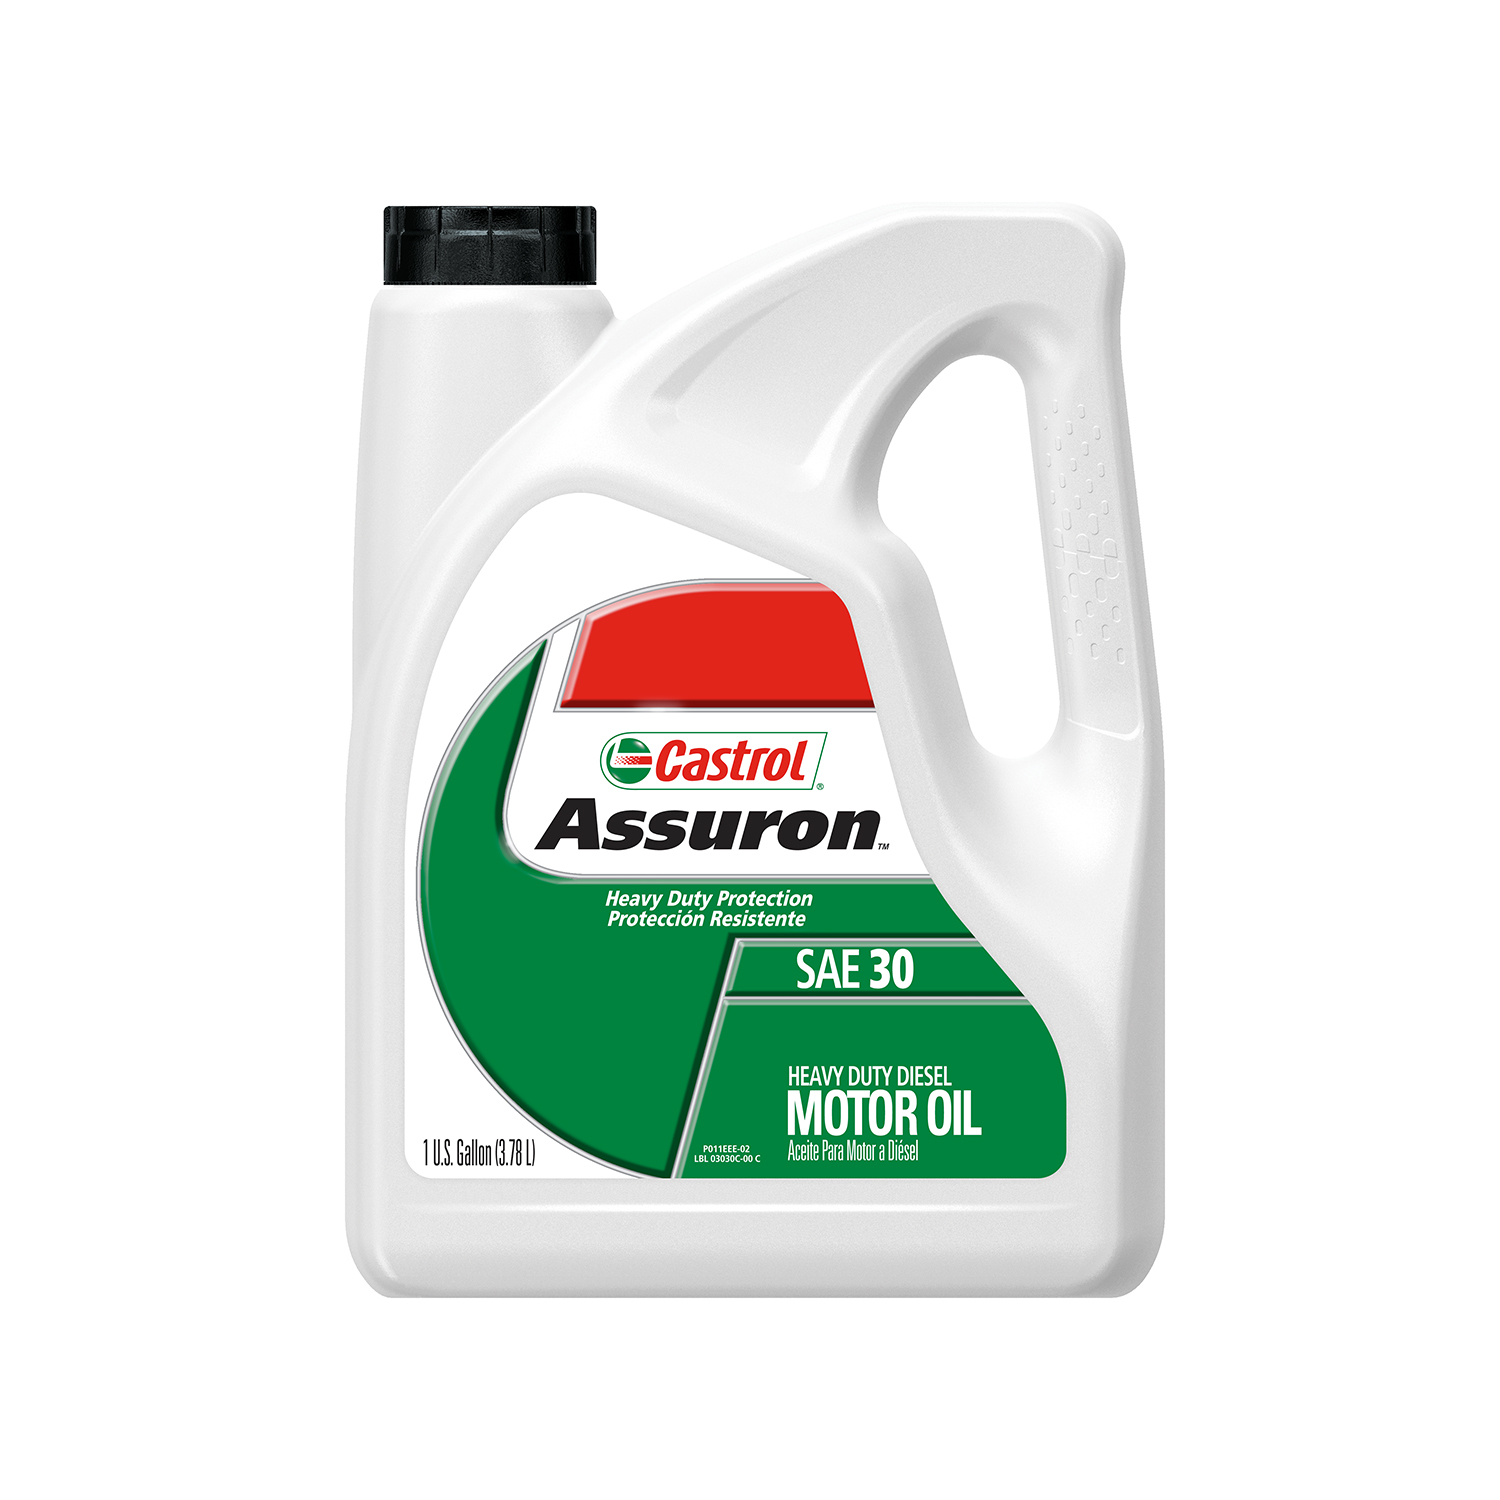 1-Gallon Castrol Assuron HD Diesel SAE 30 Motor Oil $8.04 + Free S&H w/ Walmart+ or orders $35+